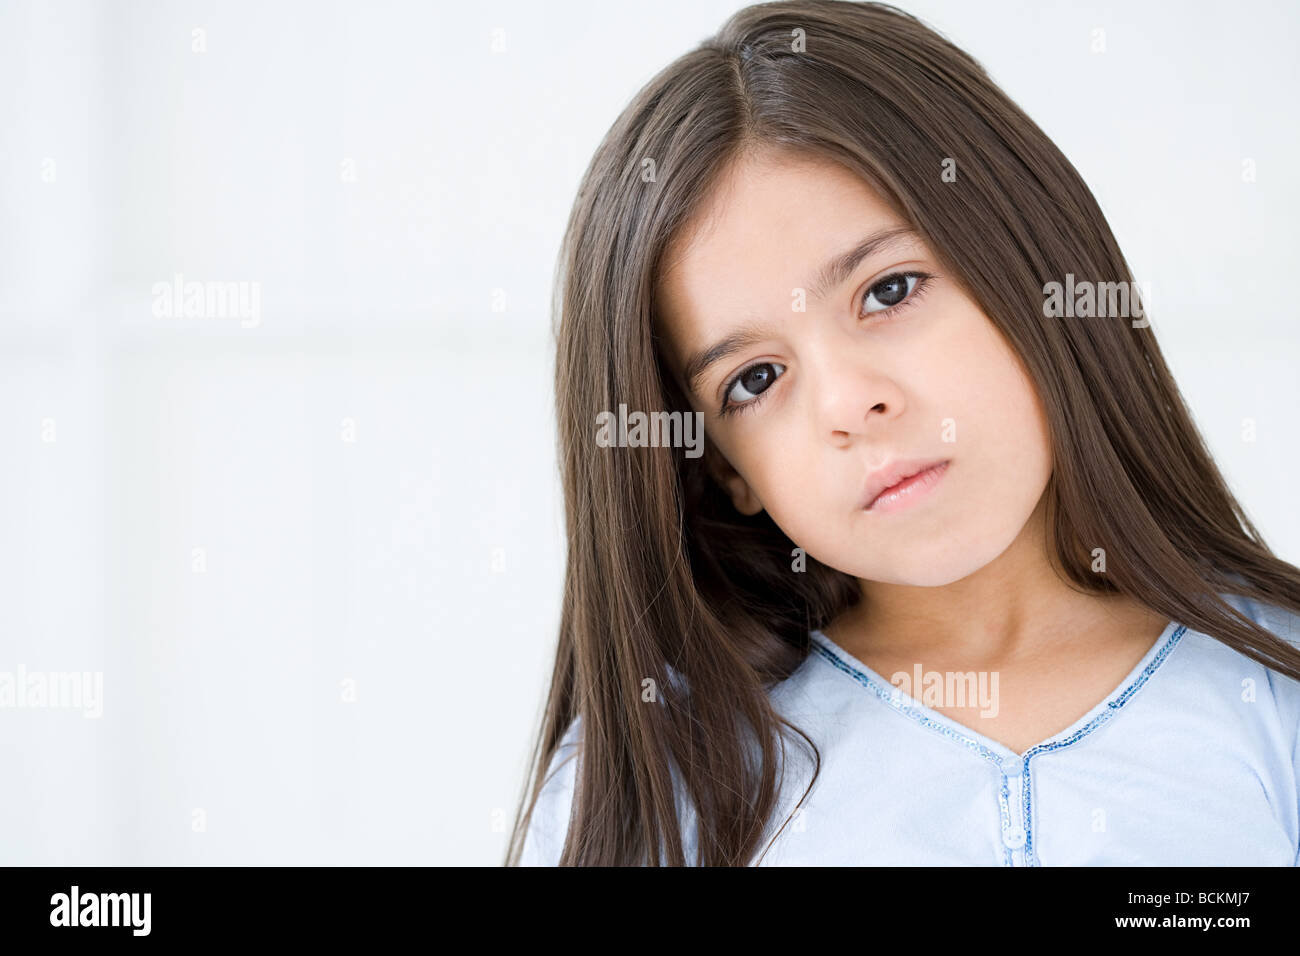 Serious looking hispanic girl Stock Photo - Alamy